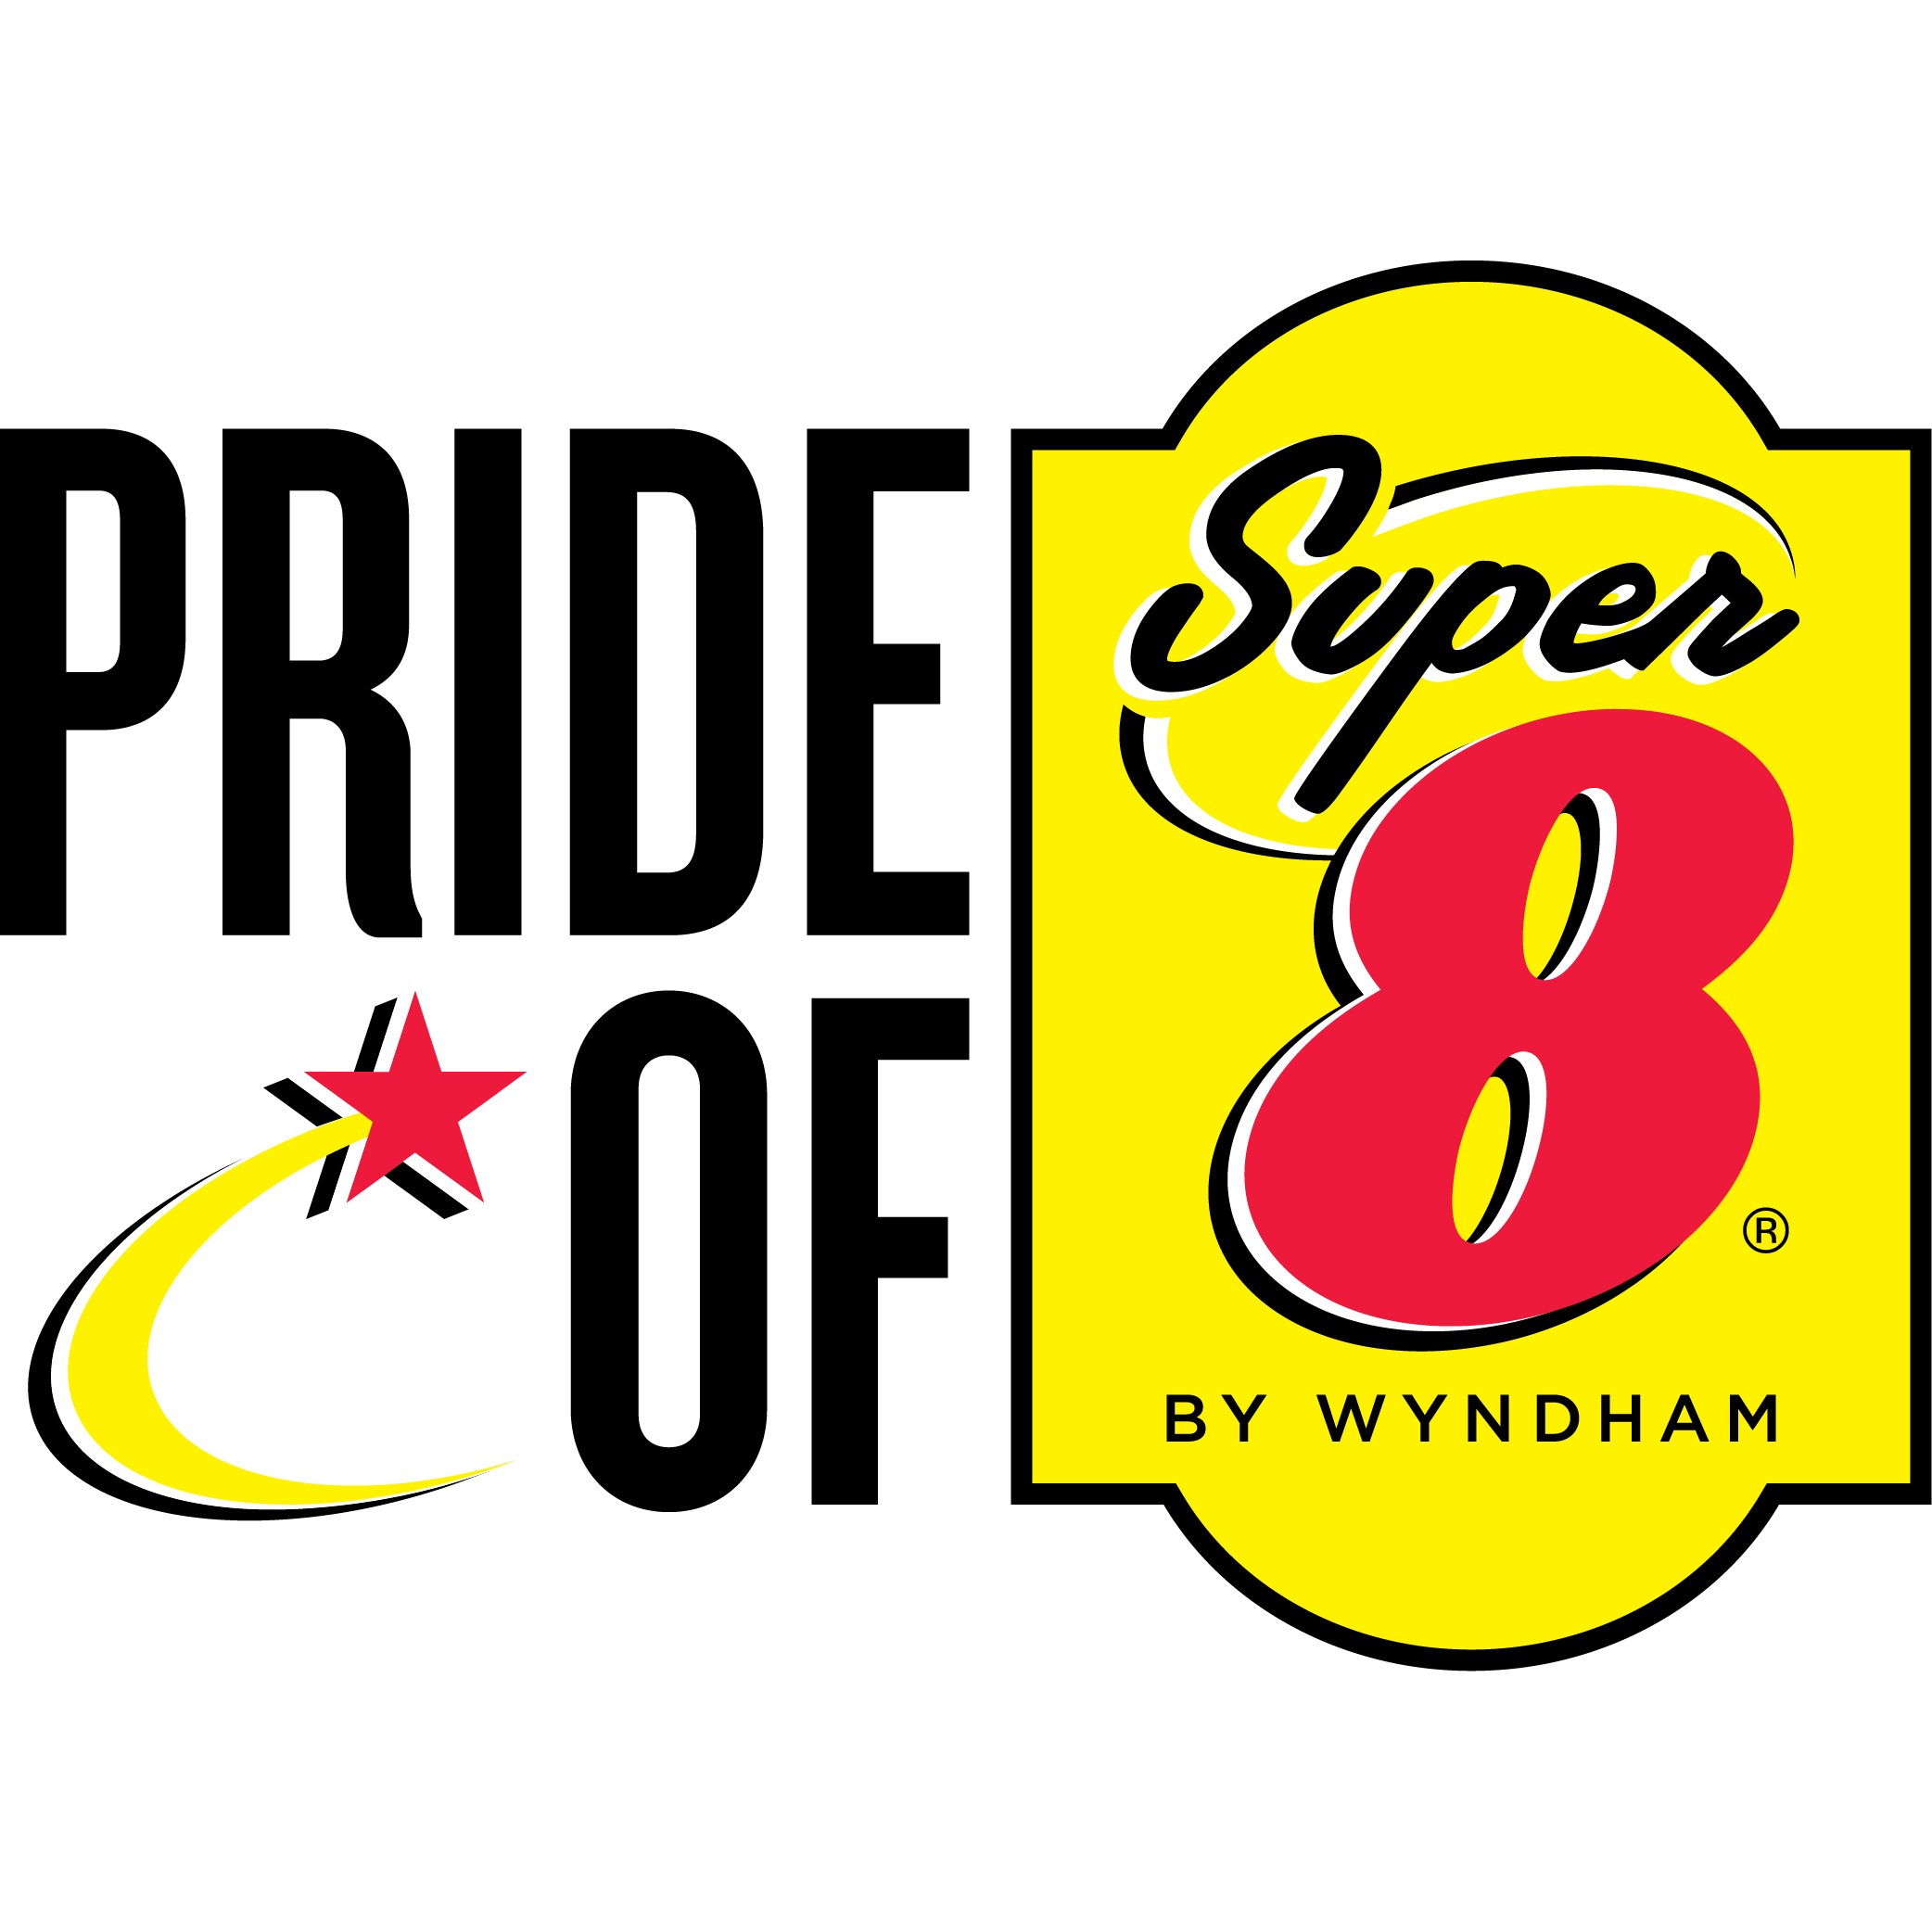 Pride of Super 8